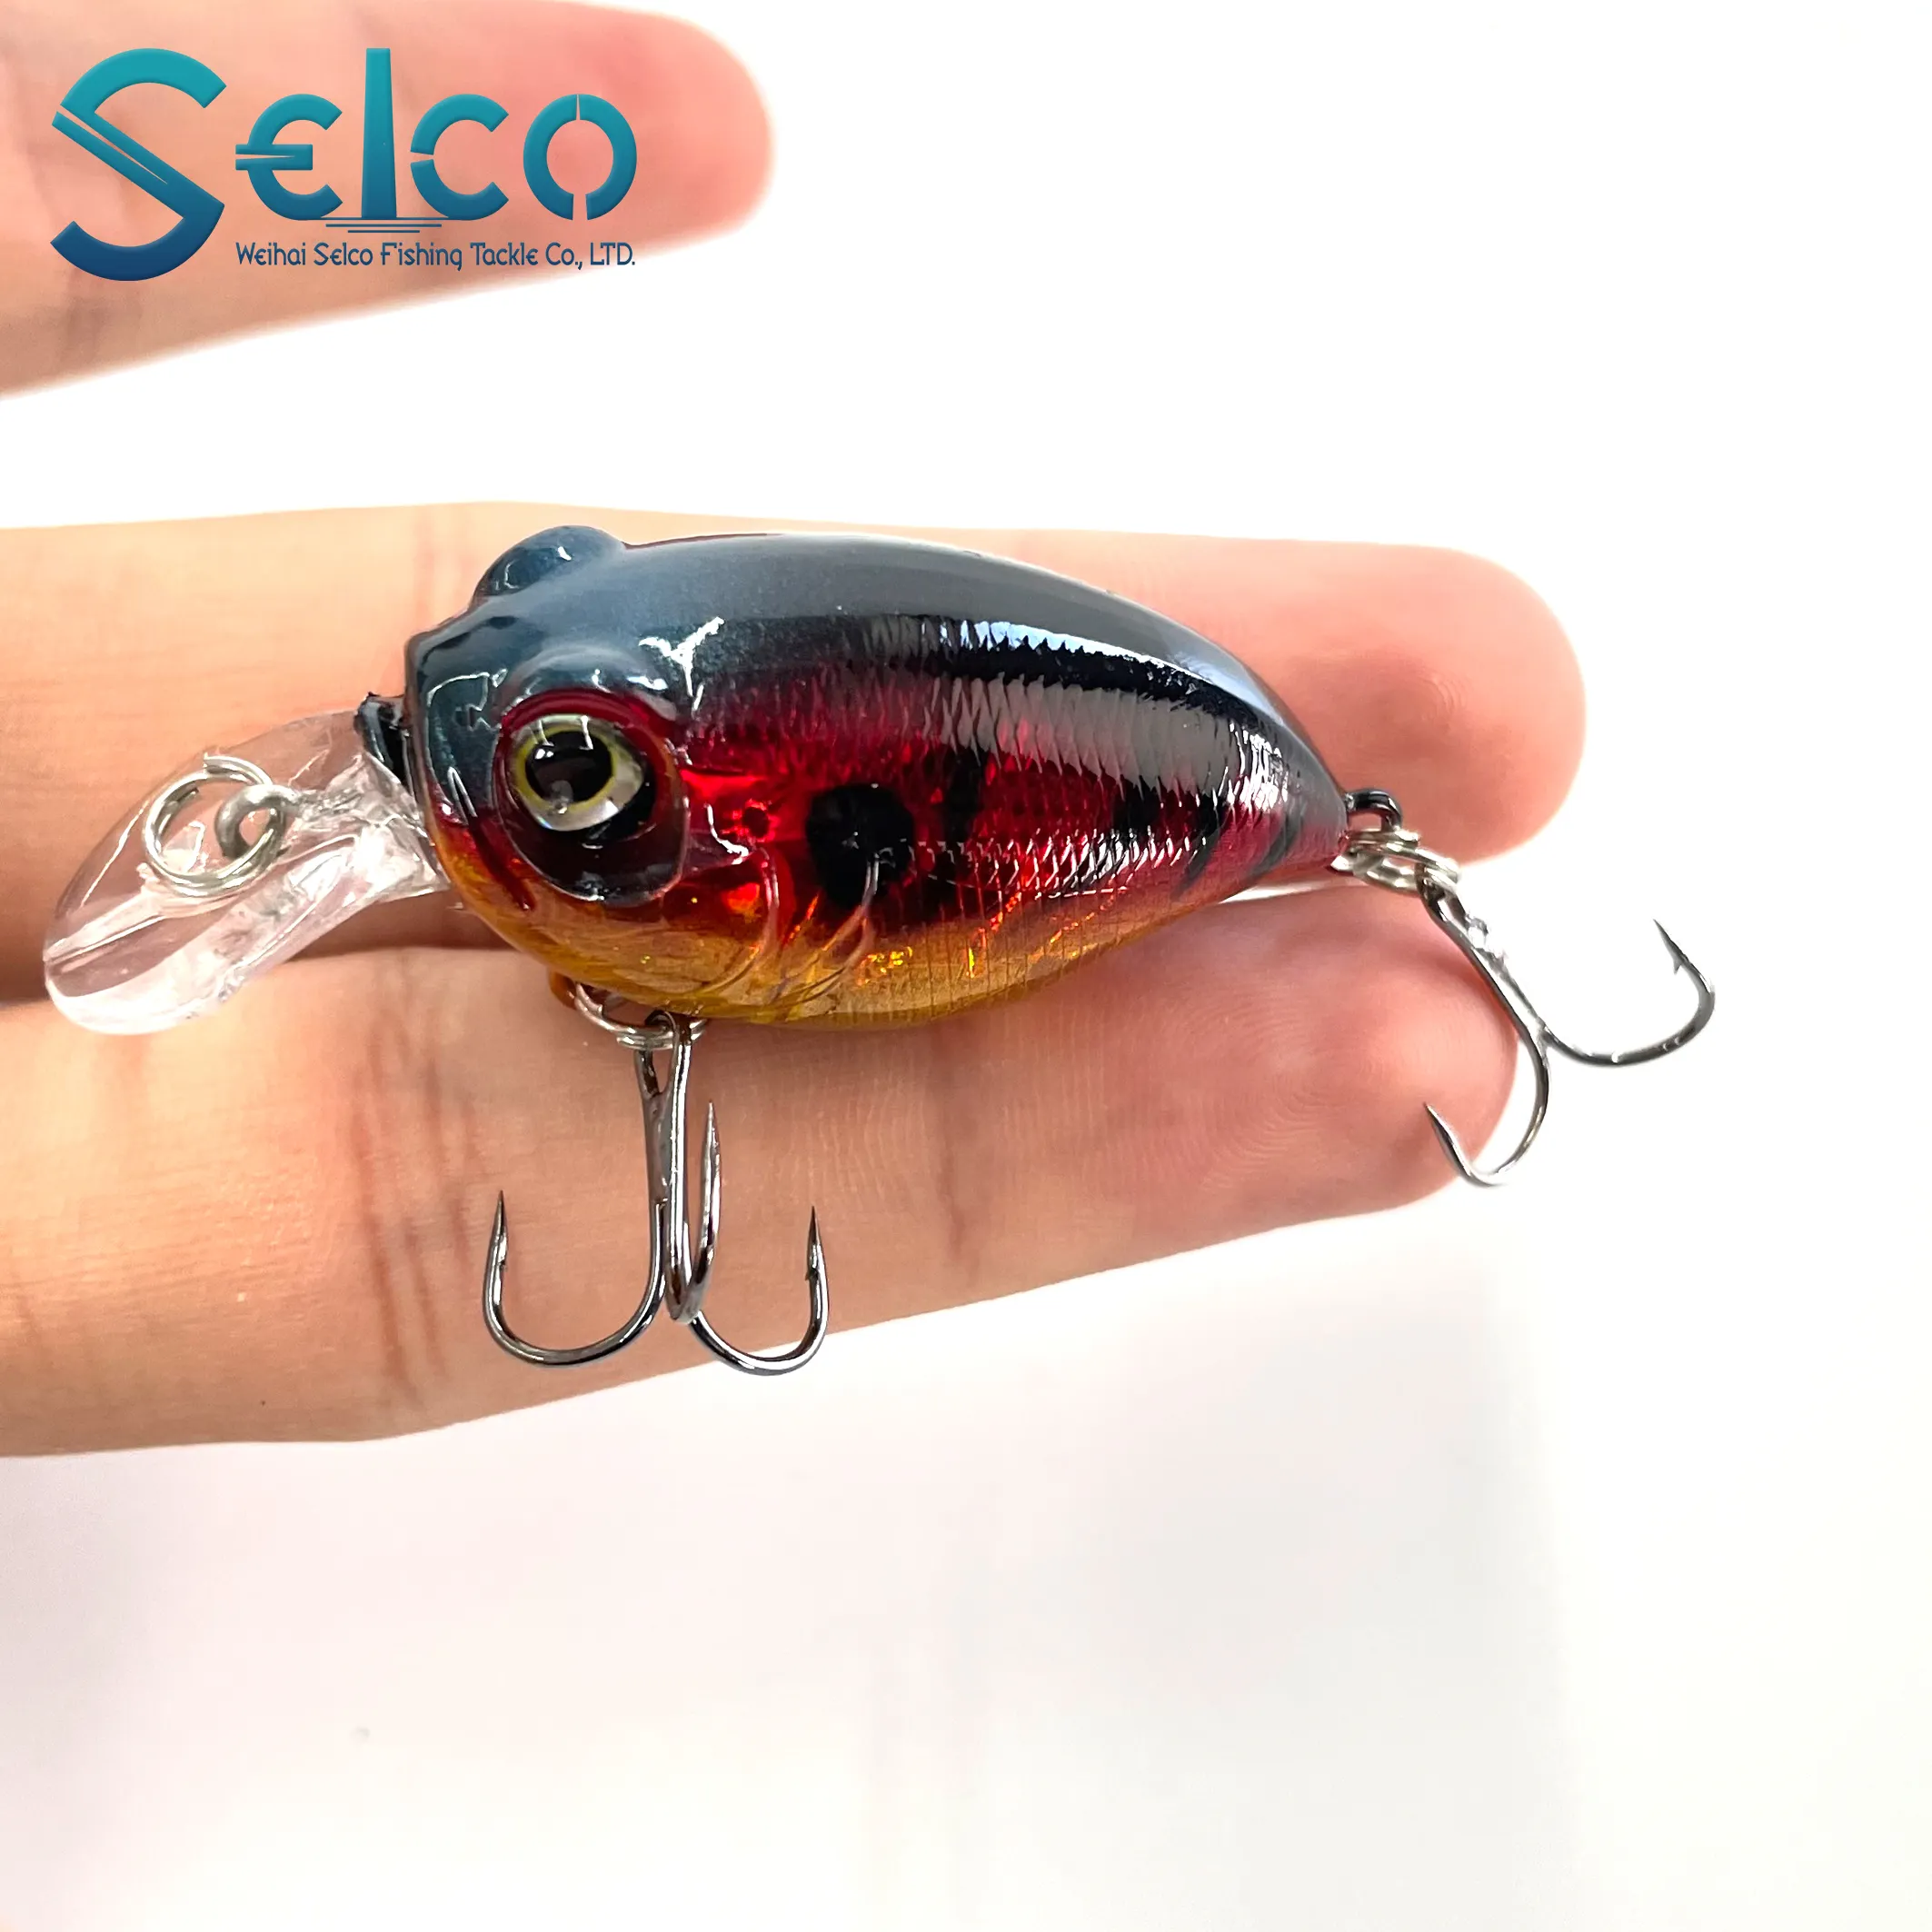 Selco 6cm 8.4g Fishing Bait Plastic Other Minnow Lure Tackle Lures Soft Plastic Worm Soft Bait Fsurinoya Fishing Lure